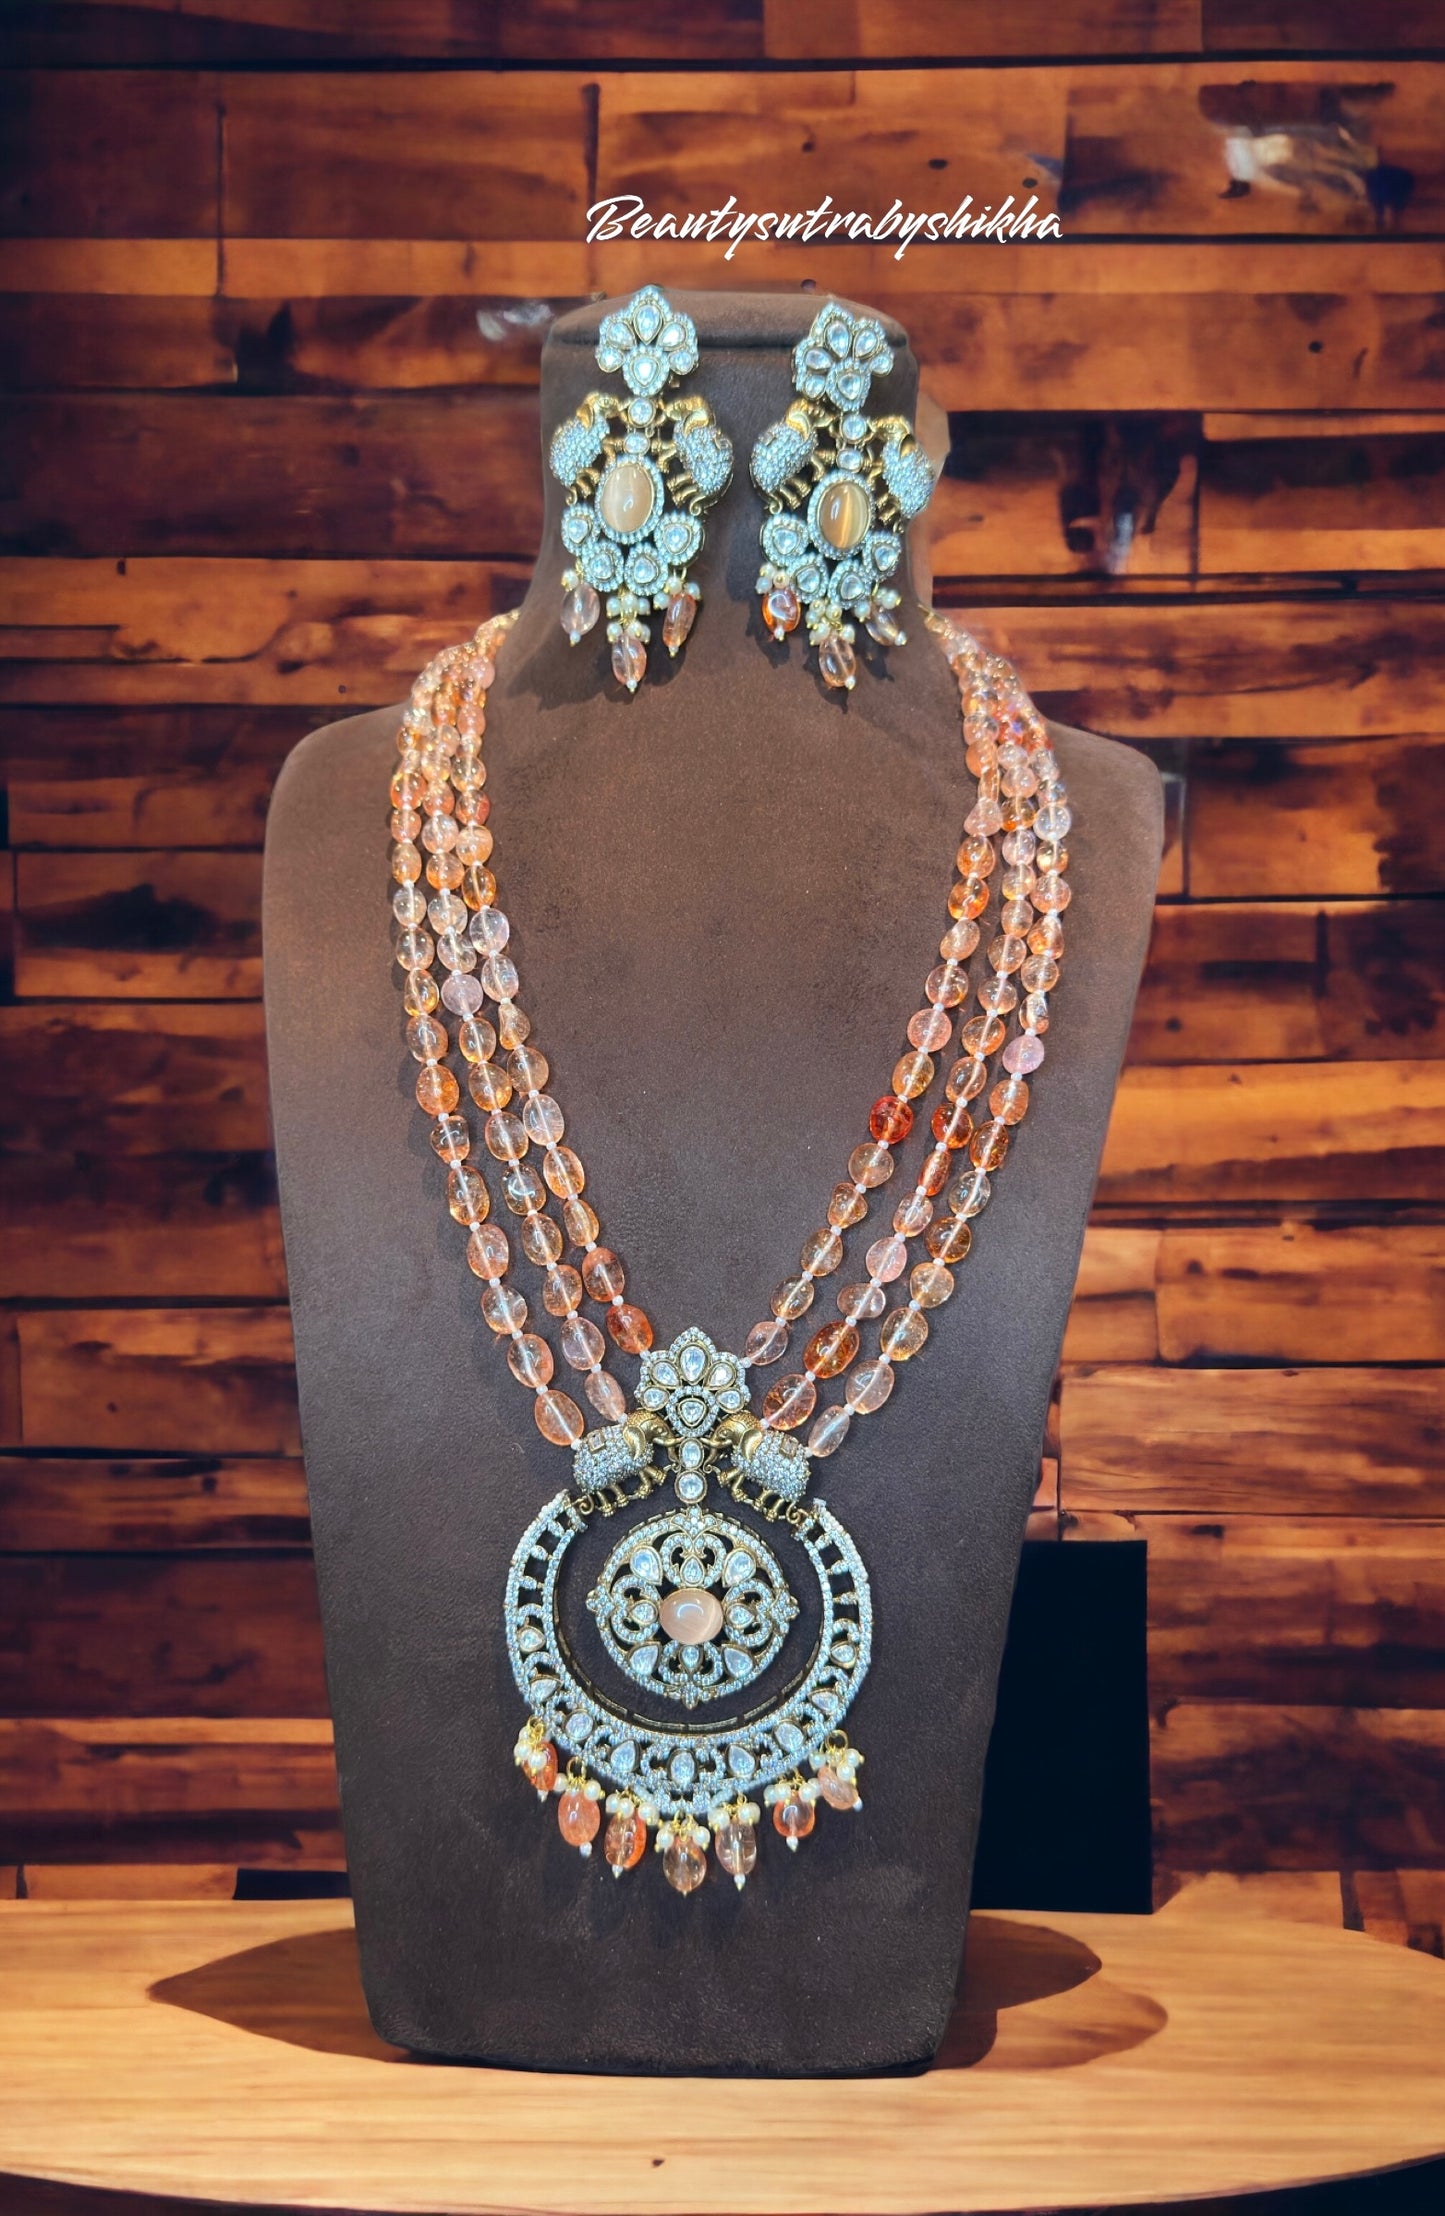 Victorian beaded necklace set - Beauty Sutra by Shikha